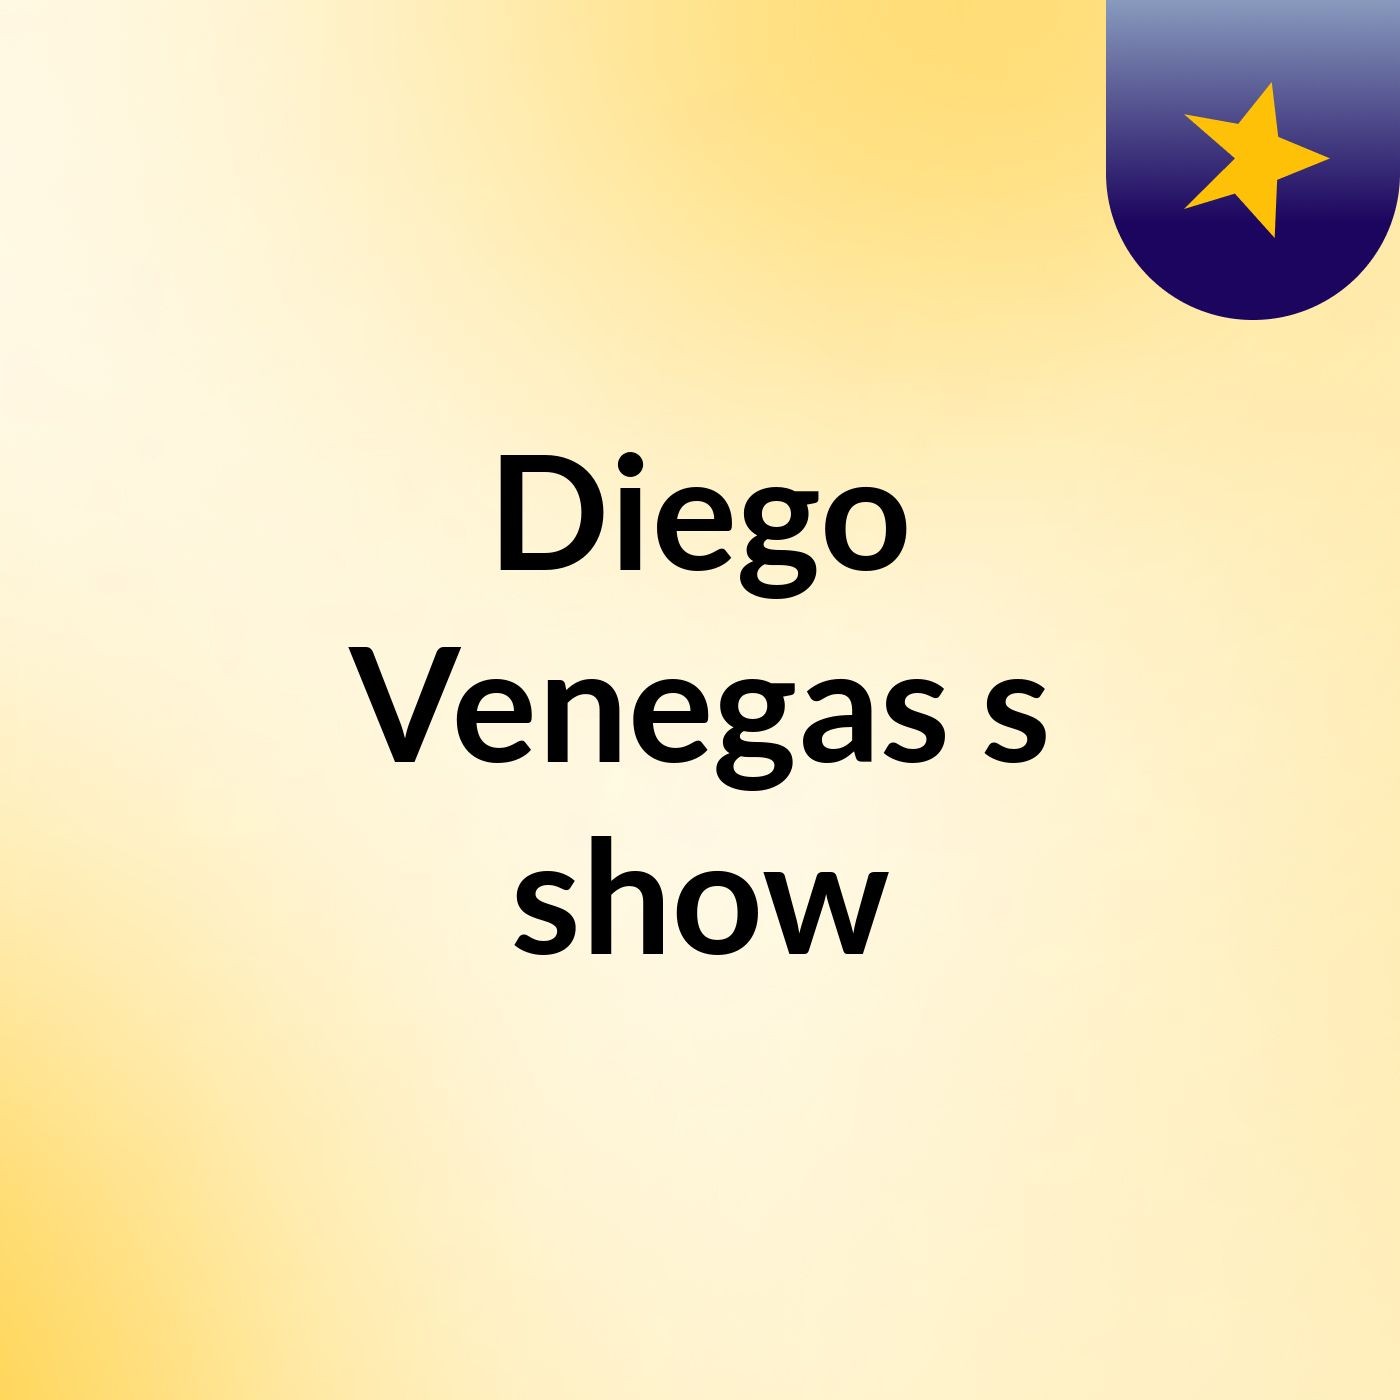 Diego Venegas's show